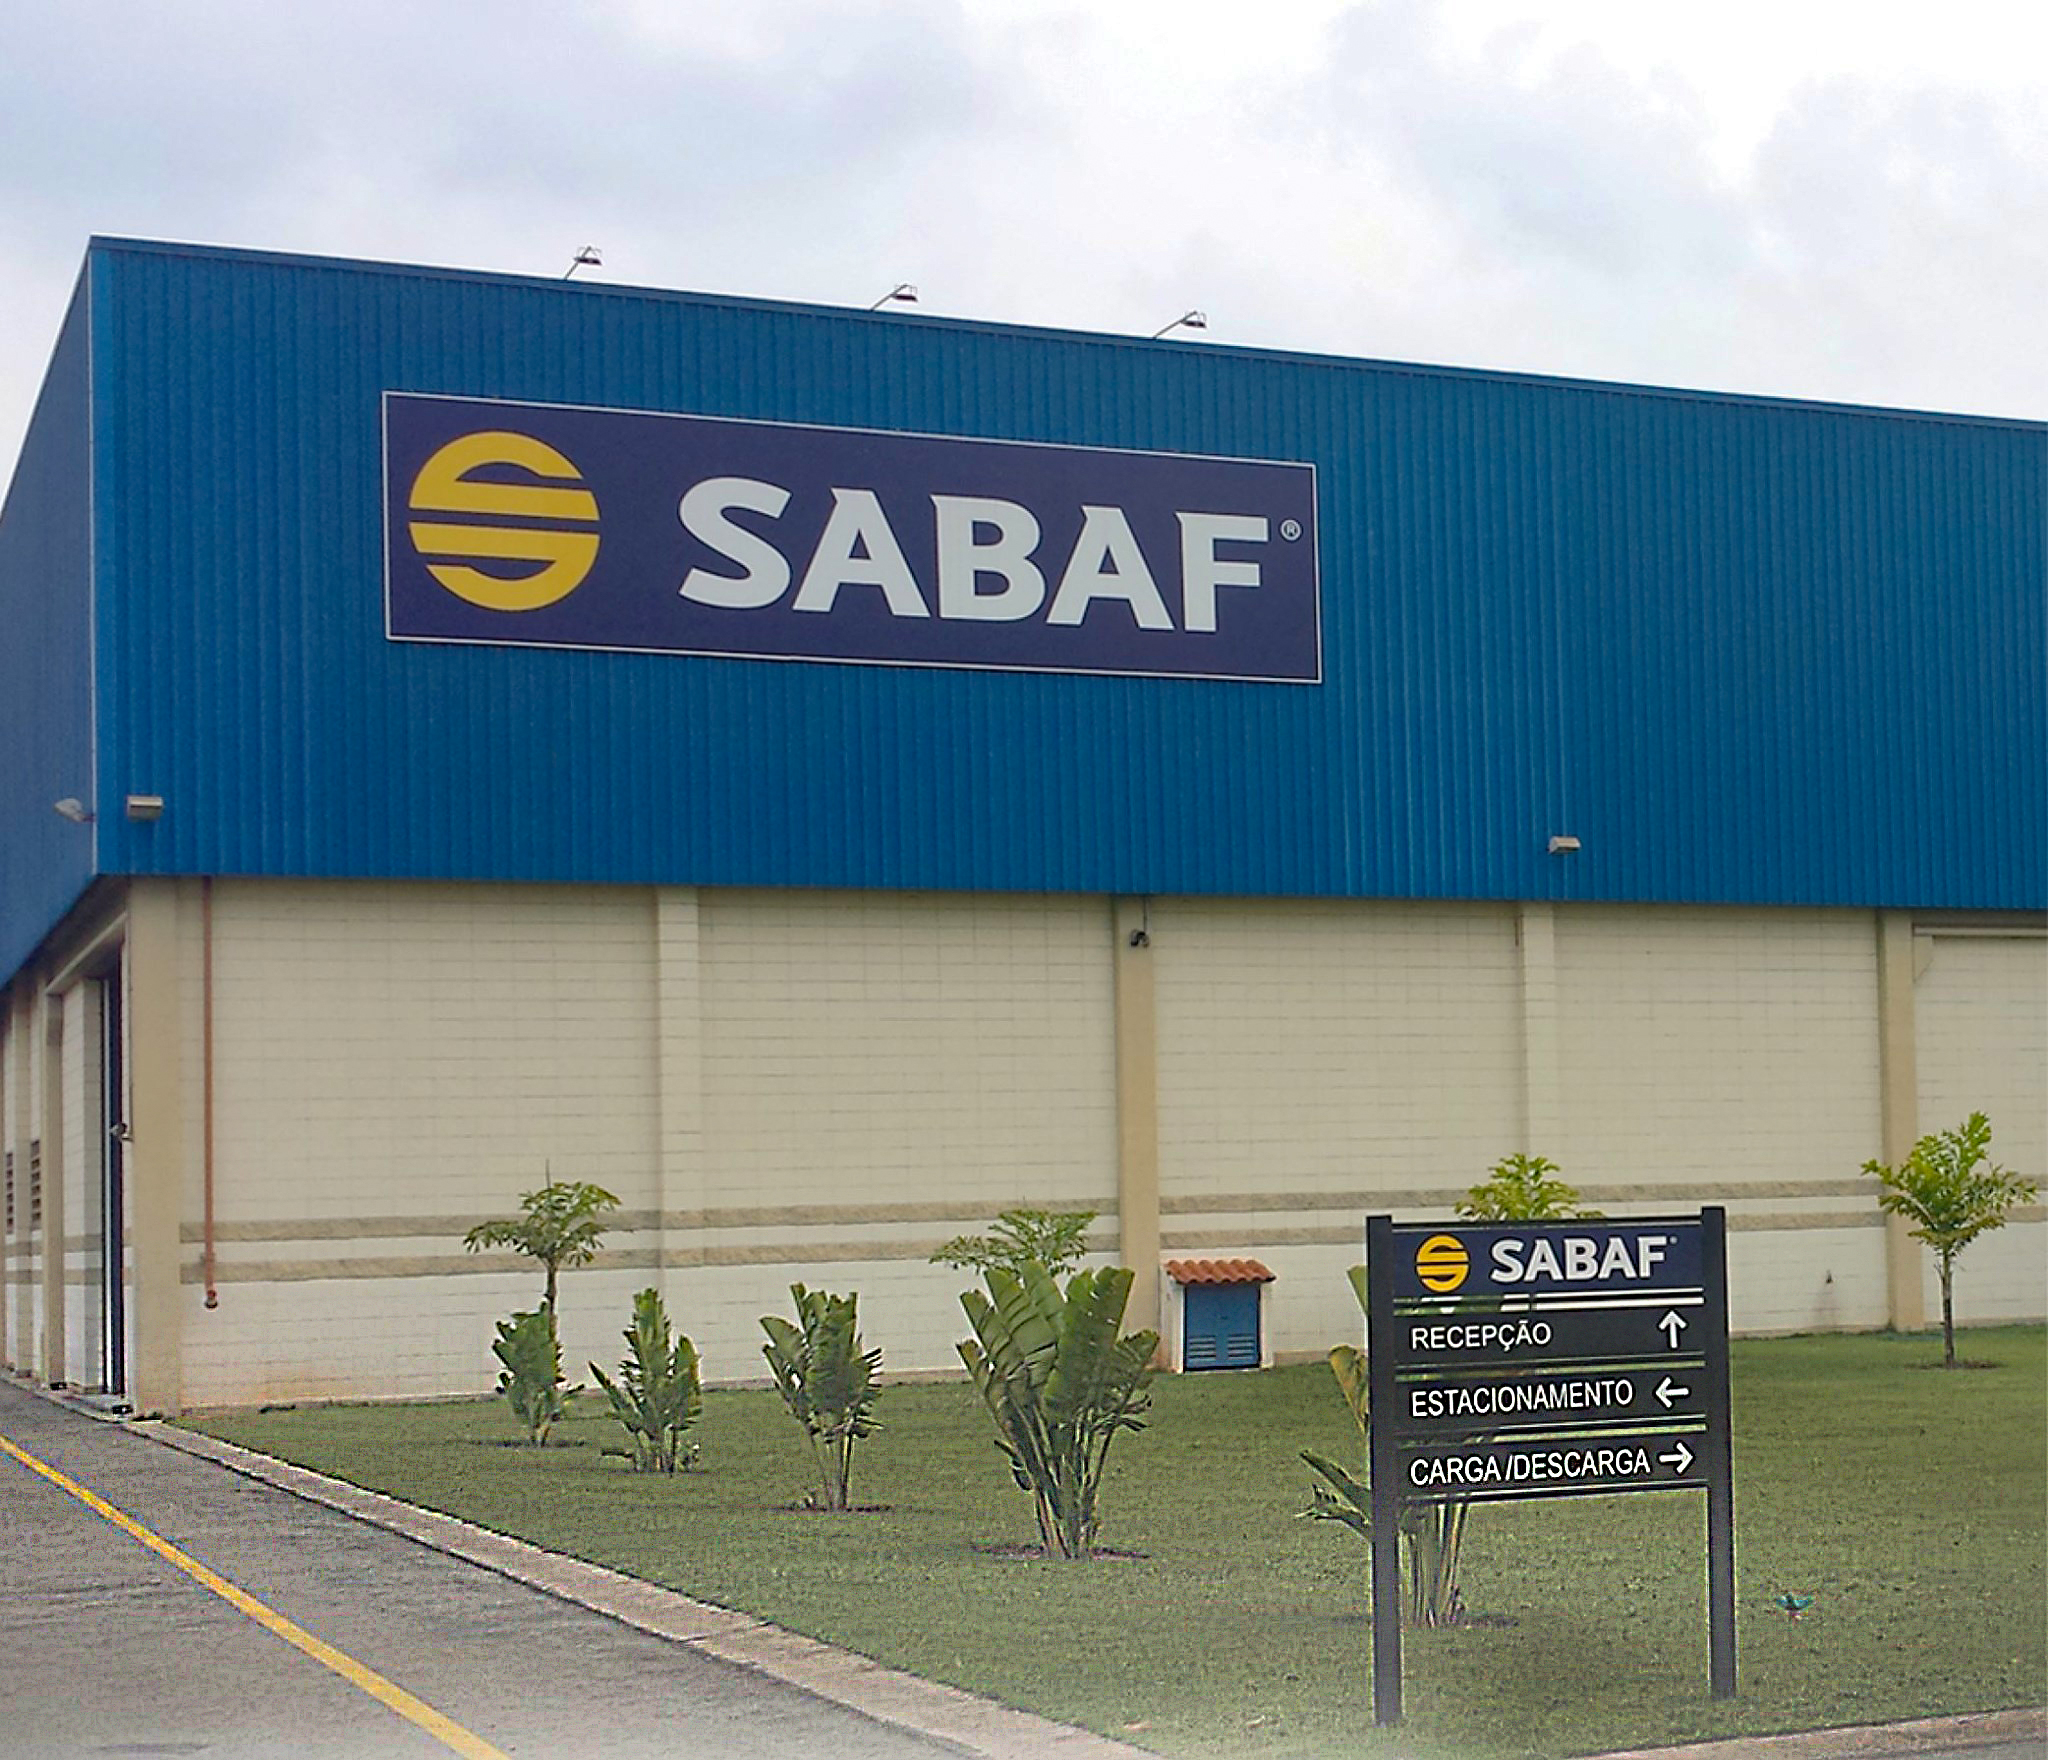 Sabaf: utile -22,3%, ma vendite in crescita nonostante tensioni